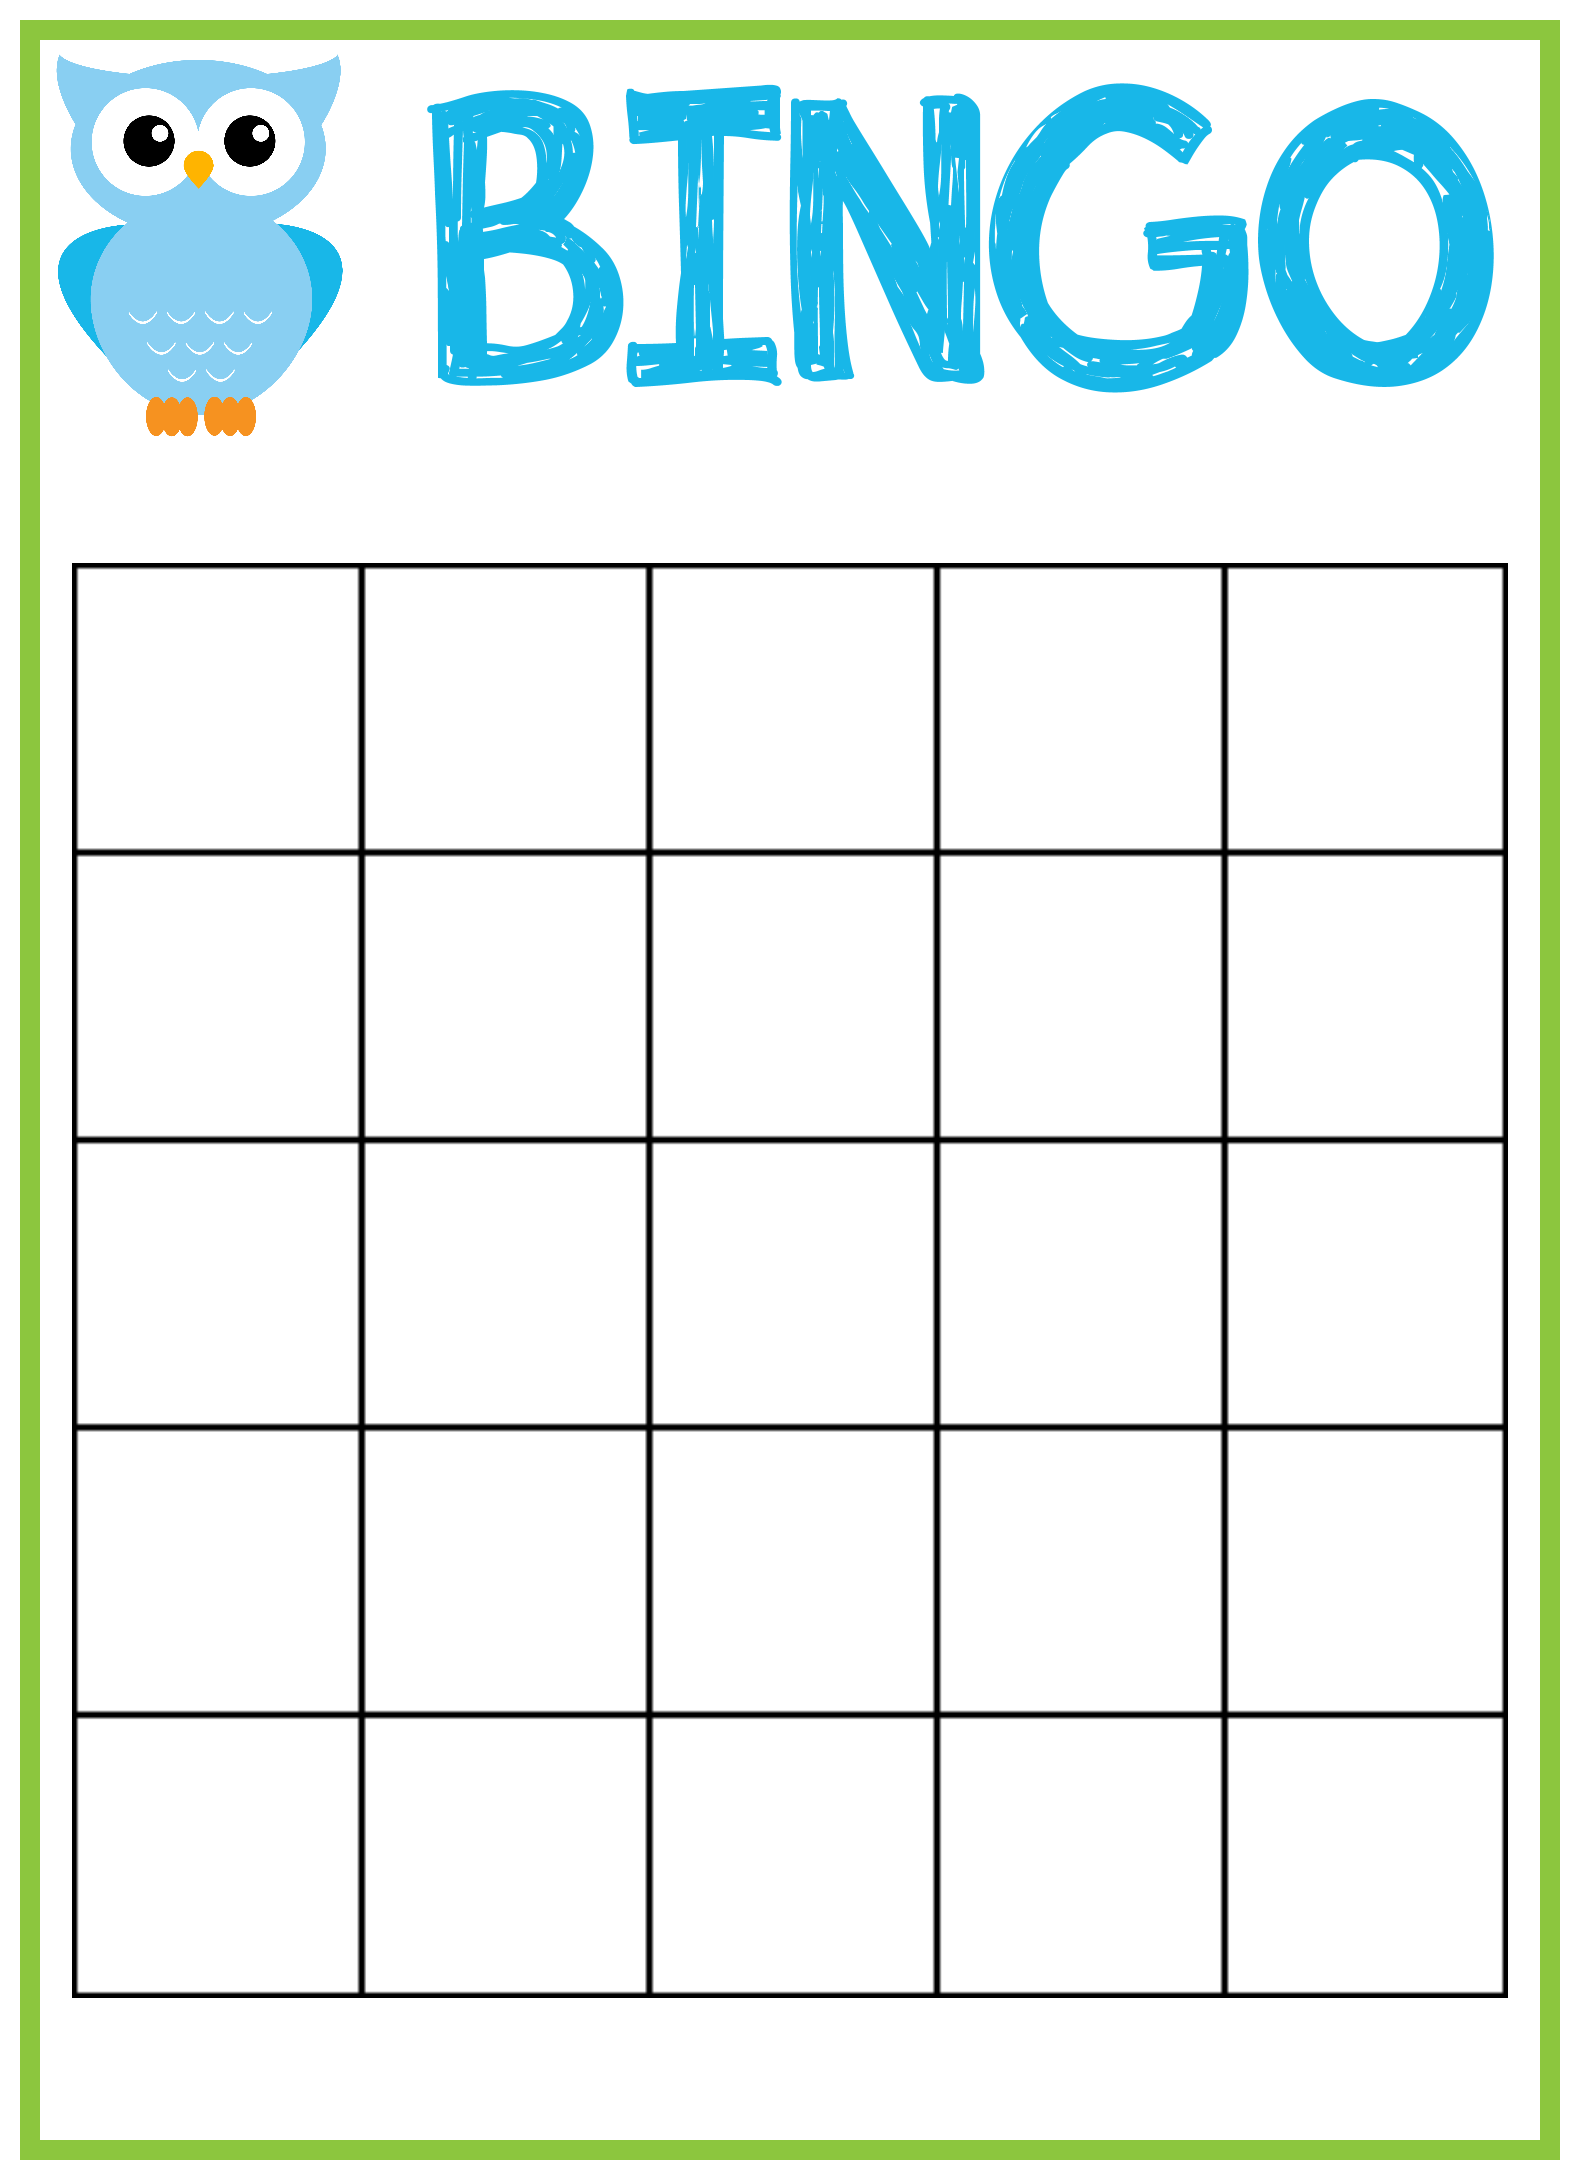 bingo-card-png-our-bingo-card-generator-randomizes-your-words-or